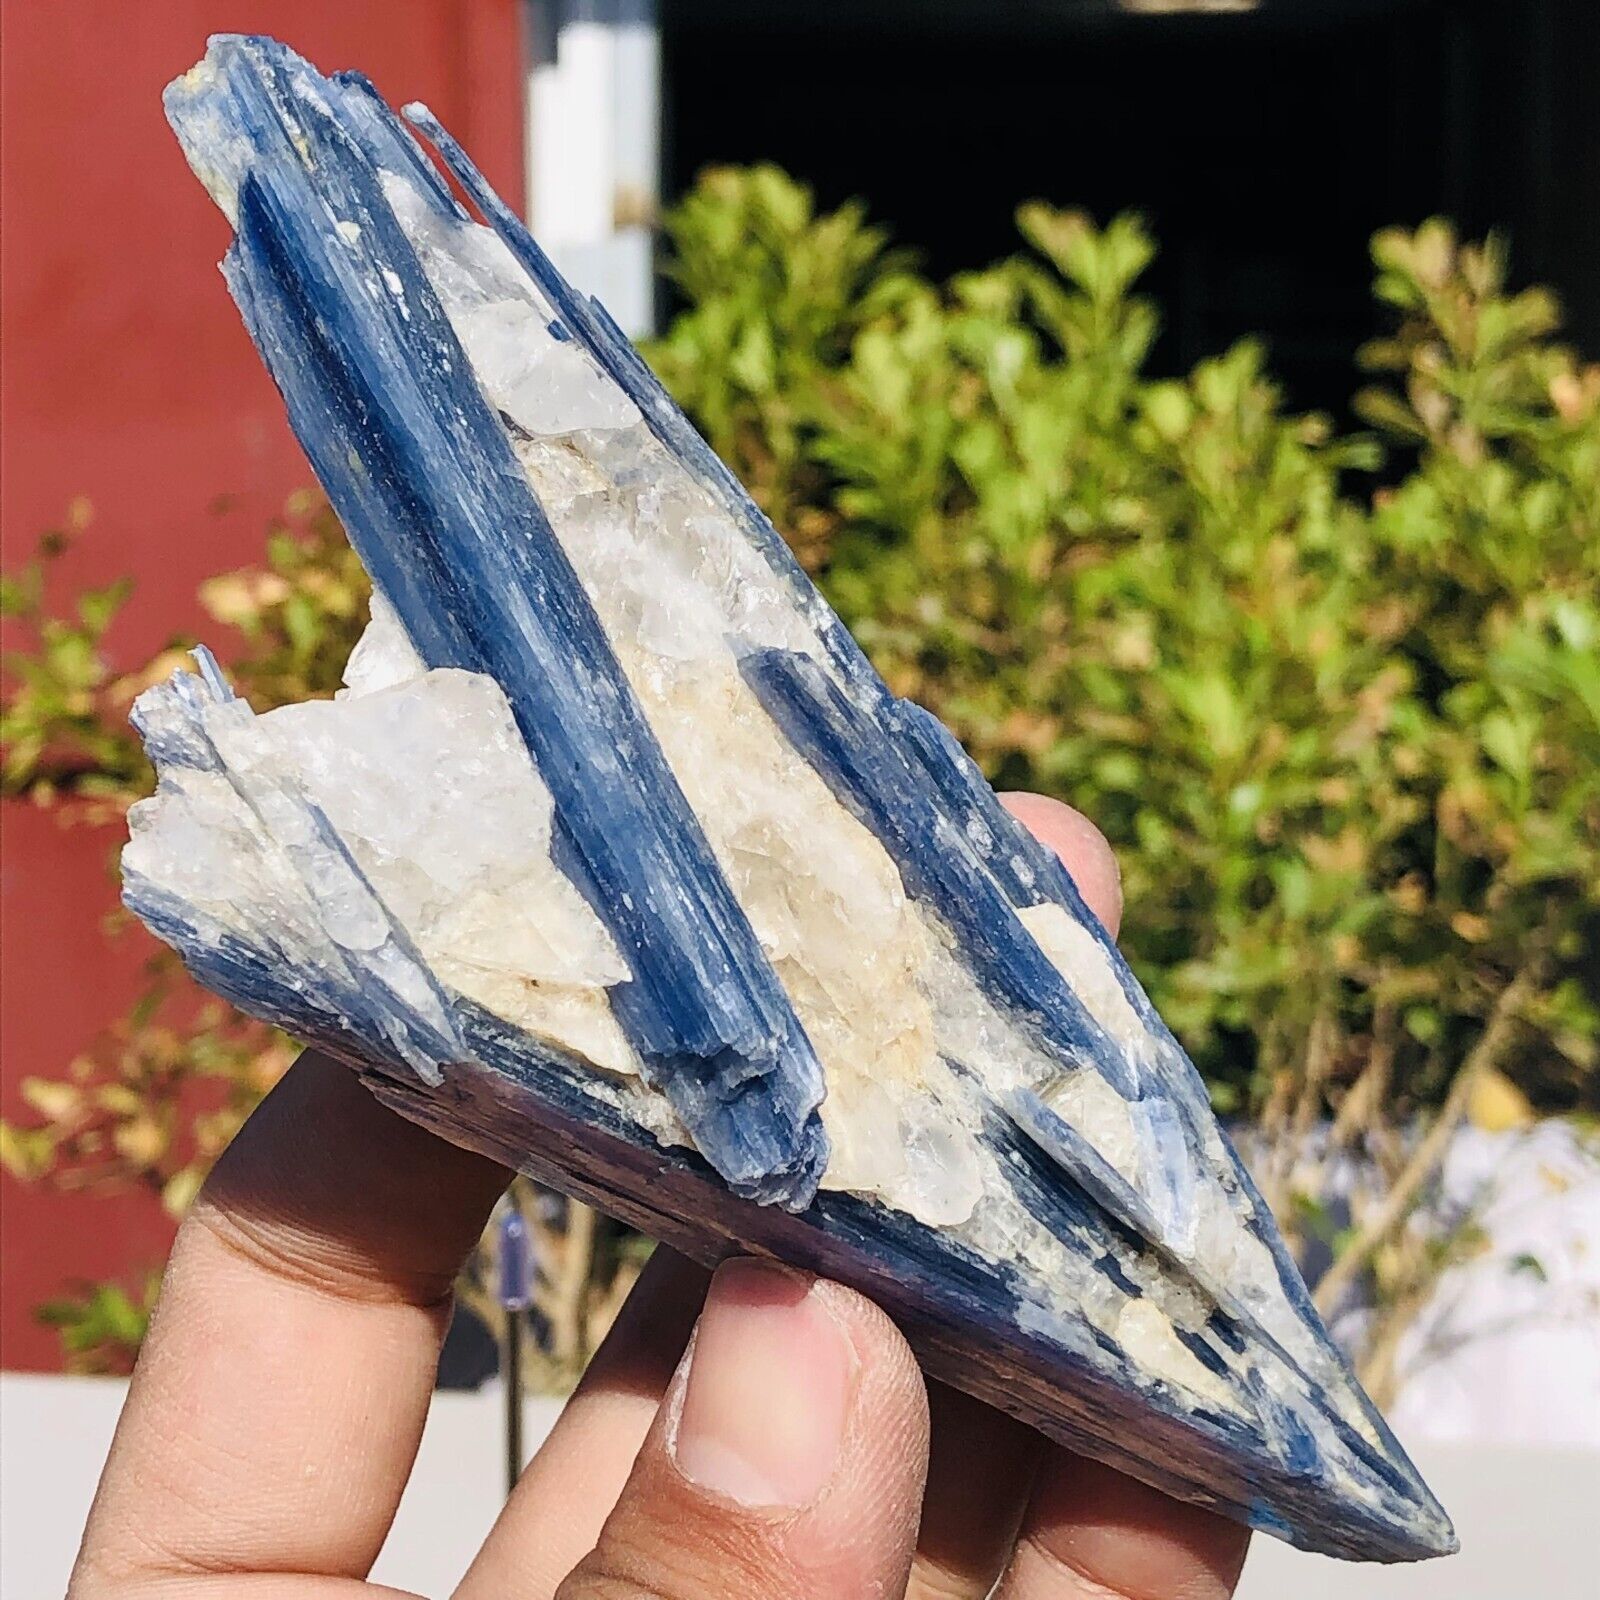 153g Rare Natural Blue Kyanite Quartz Crystal Mineral Rough Specimen Healing